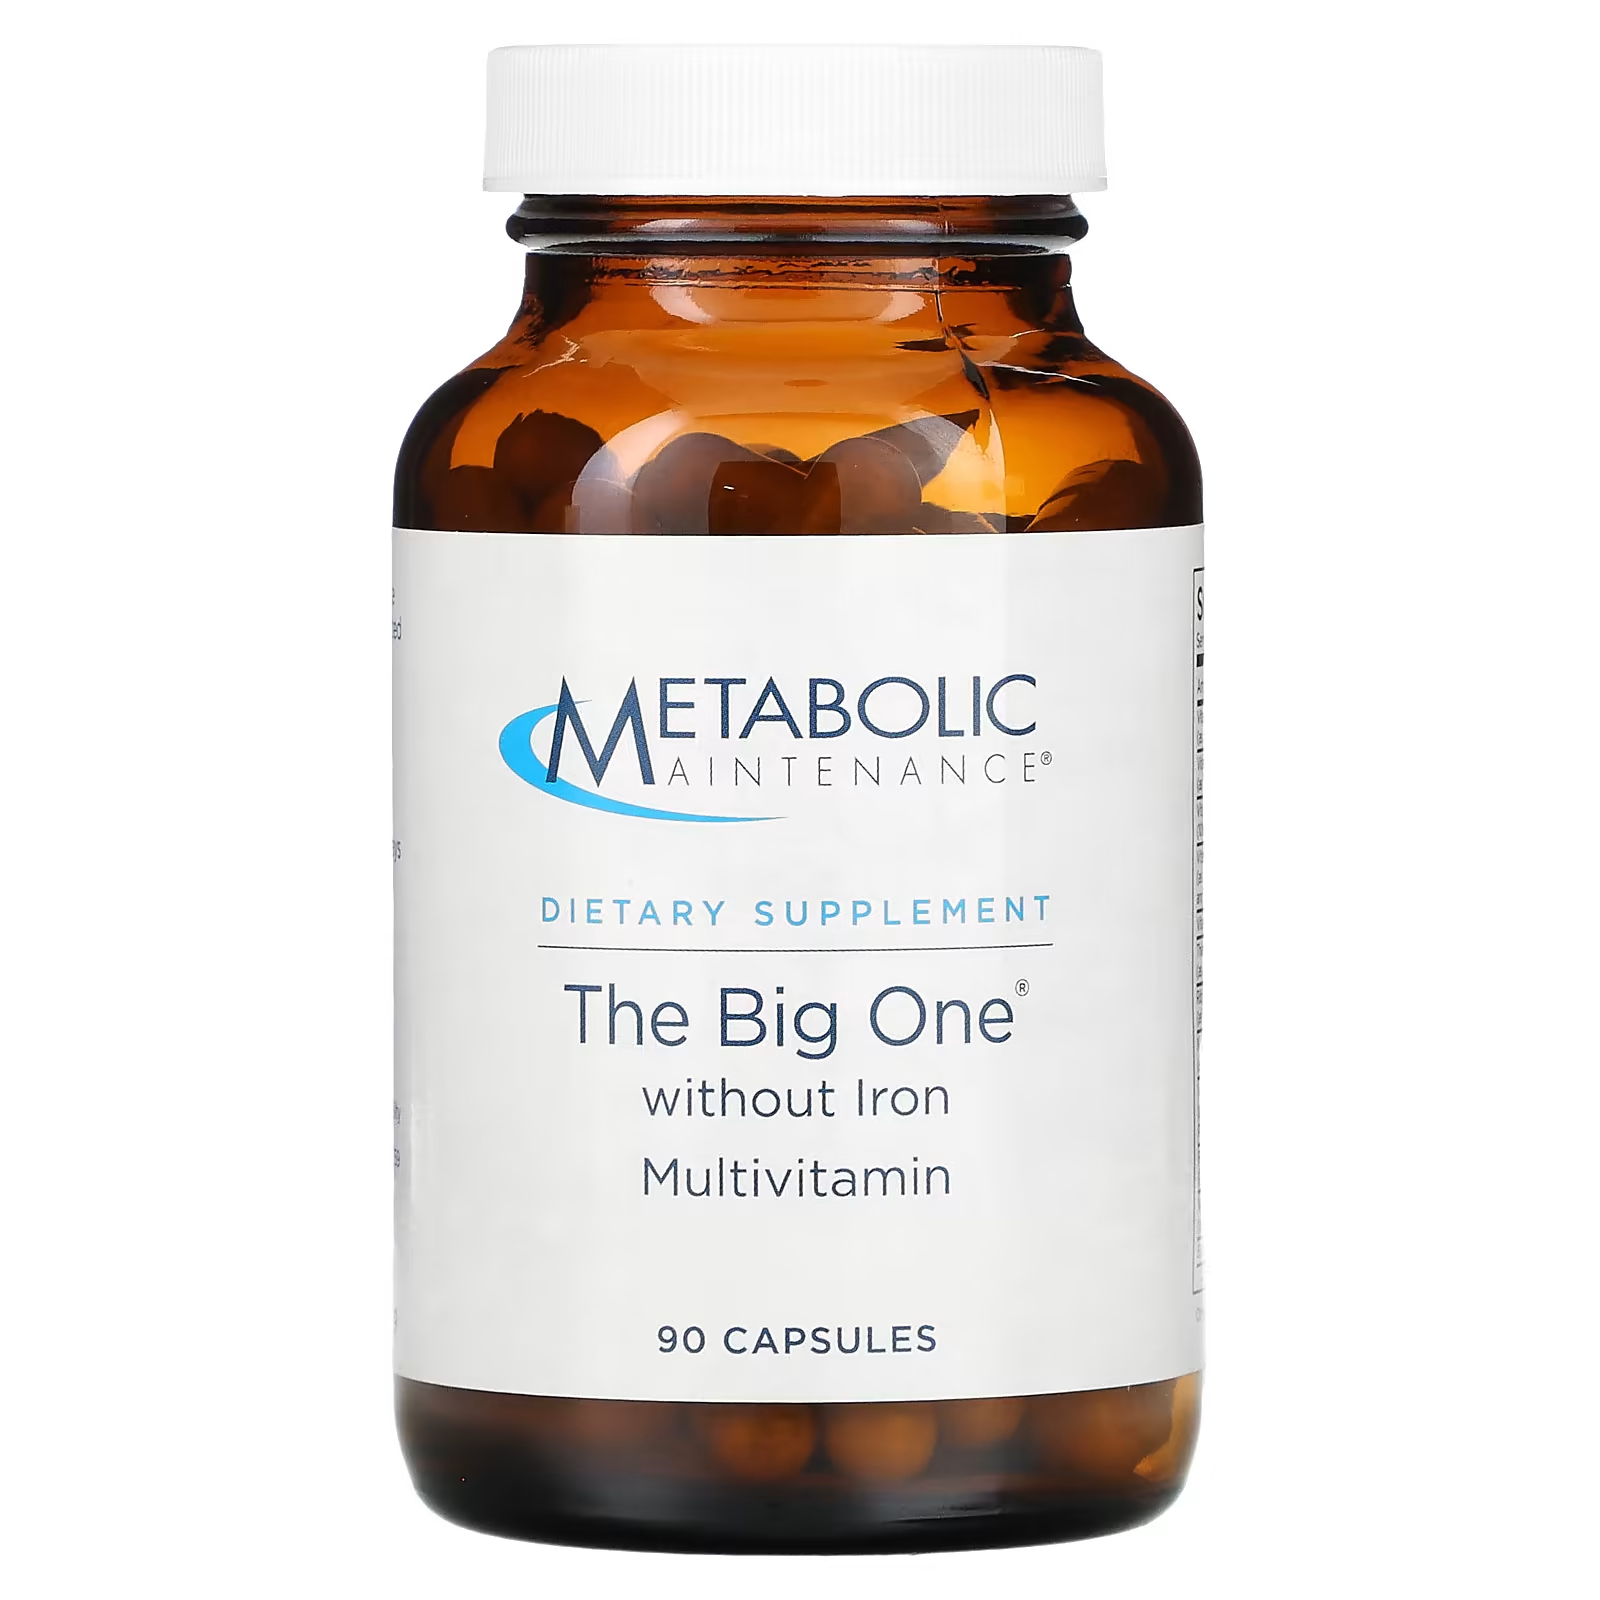 Метаболическое обслуживание The Big One без железа, 90 капсул Metabolic Maintenance metabolic maintenance the big one без железа 100 капсул